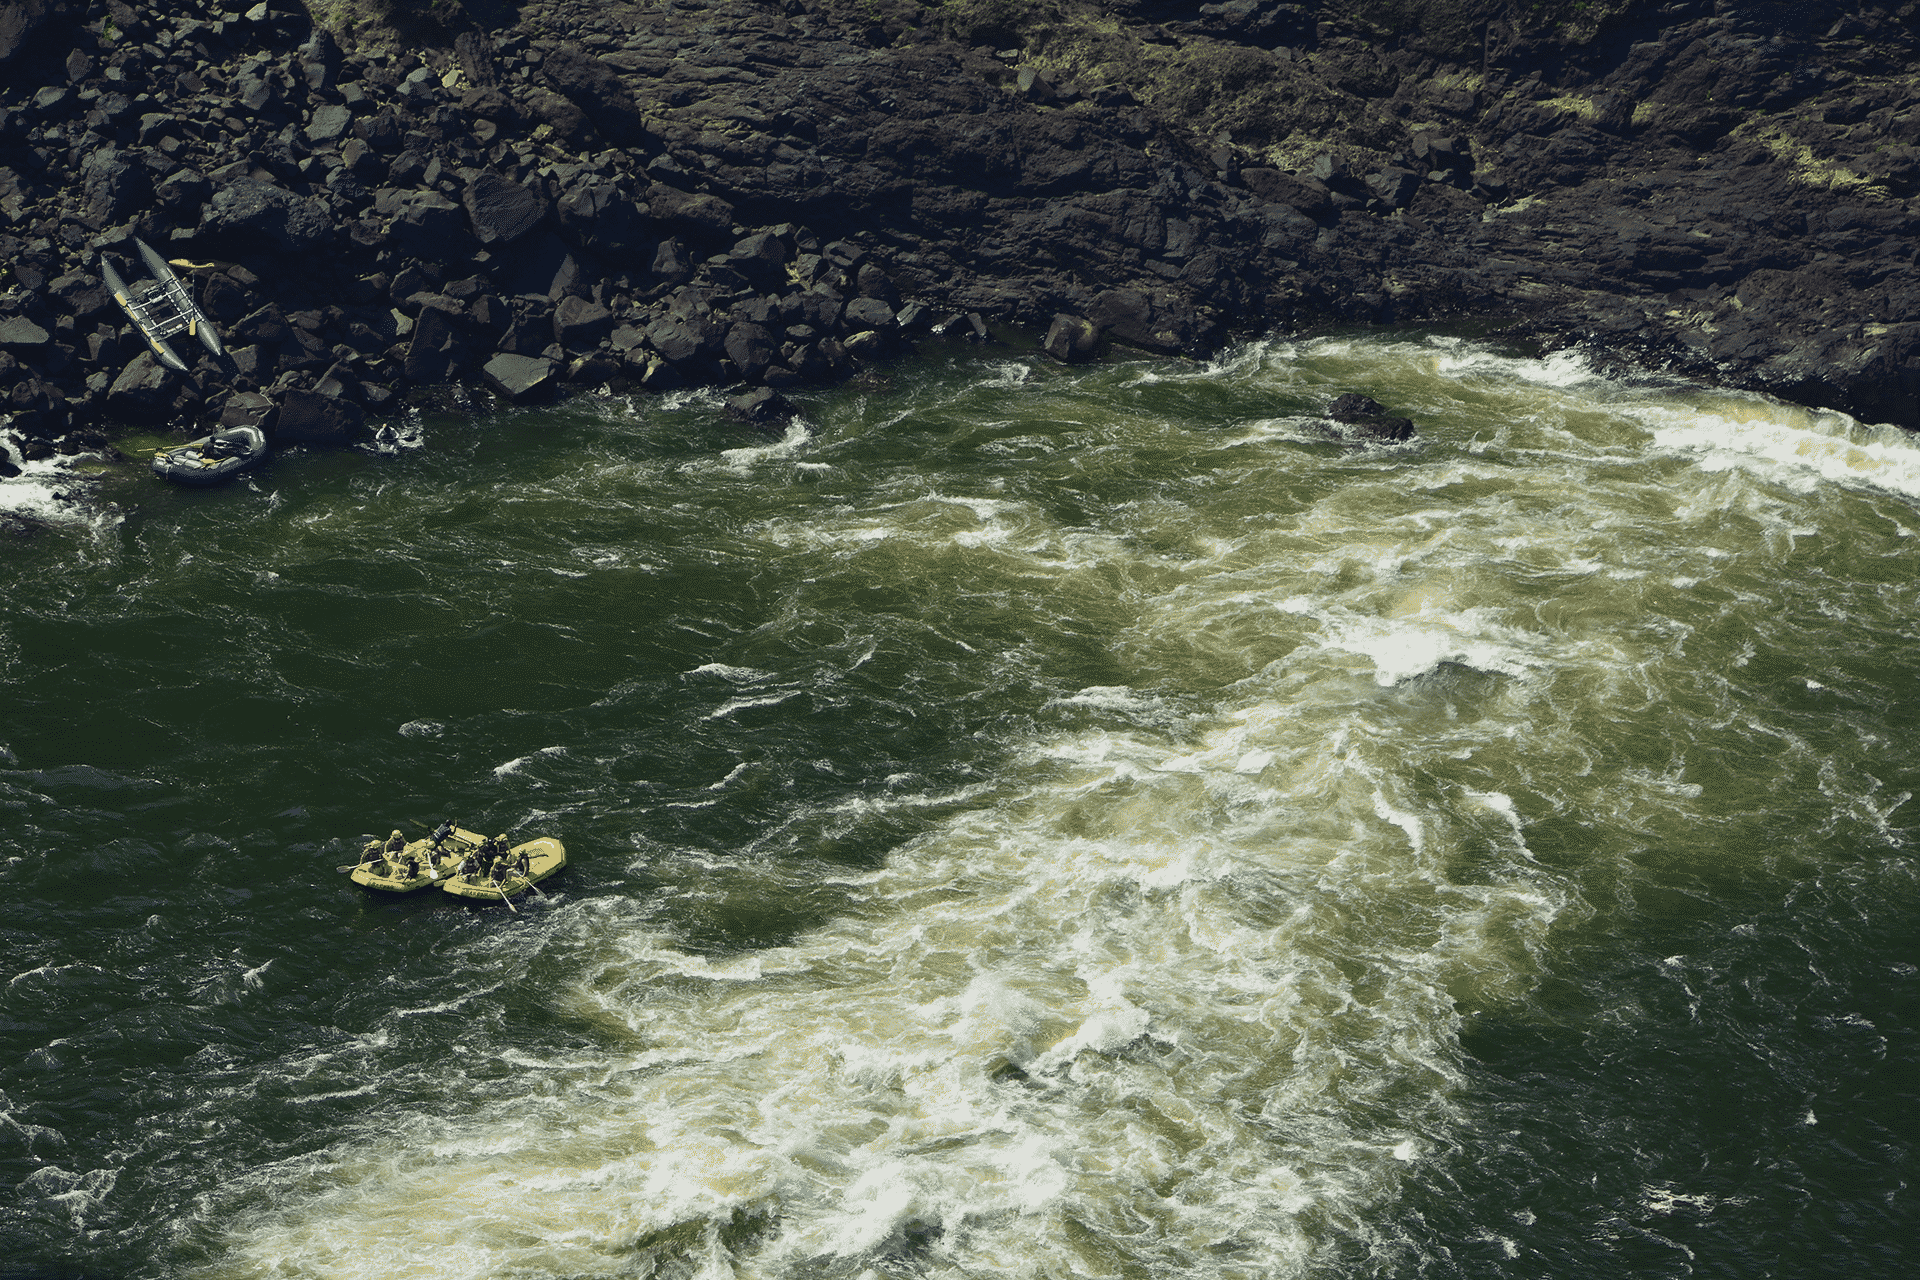 White water rafting experience in Batoka Gorge, Victoria Falls